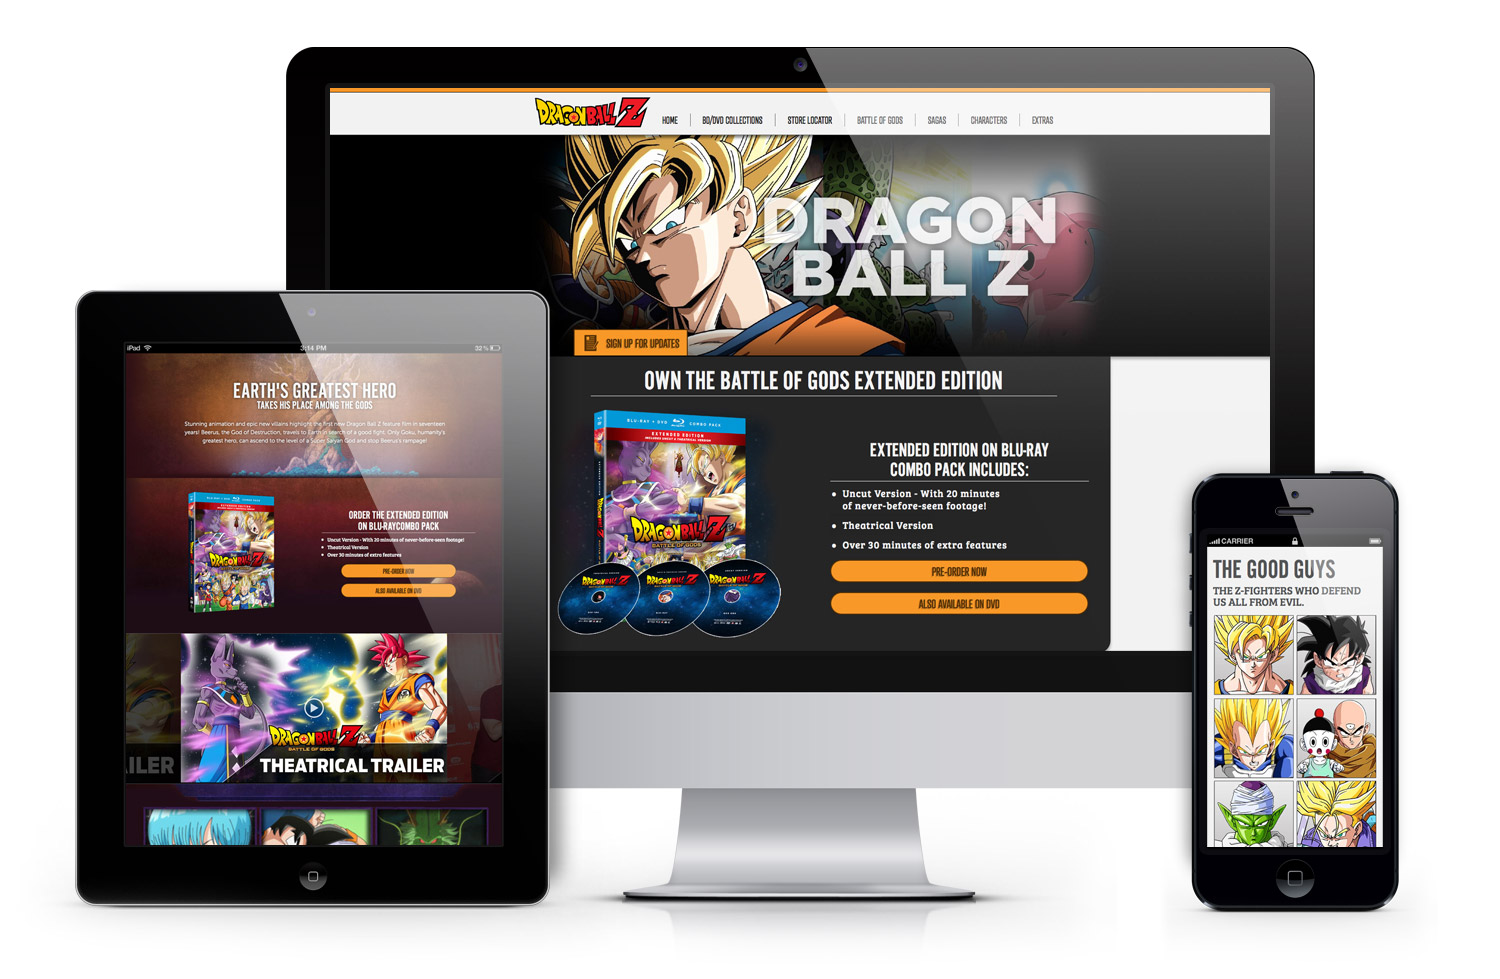 Dragon Ball Z's fullscreen image